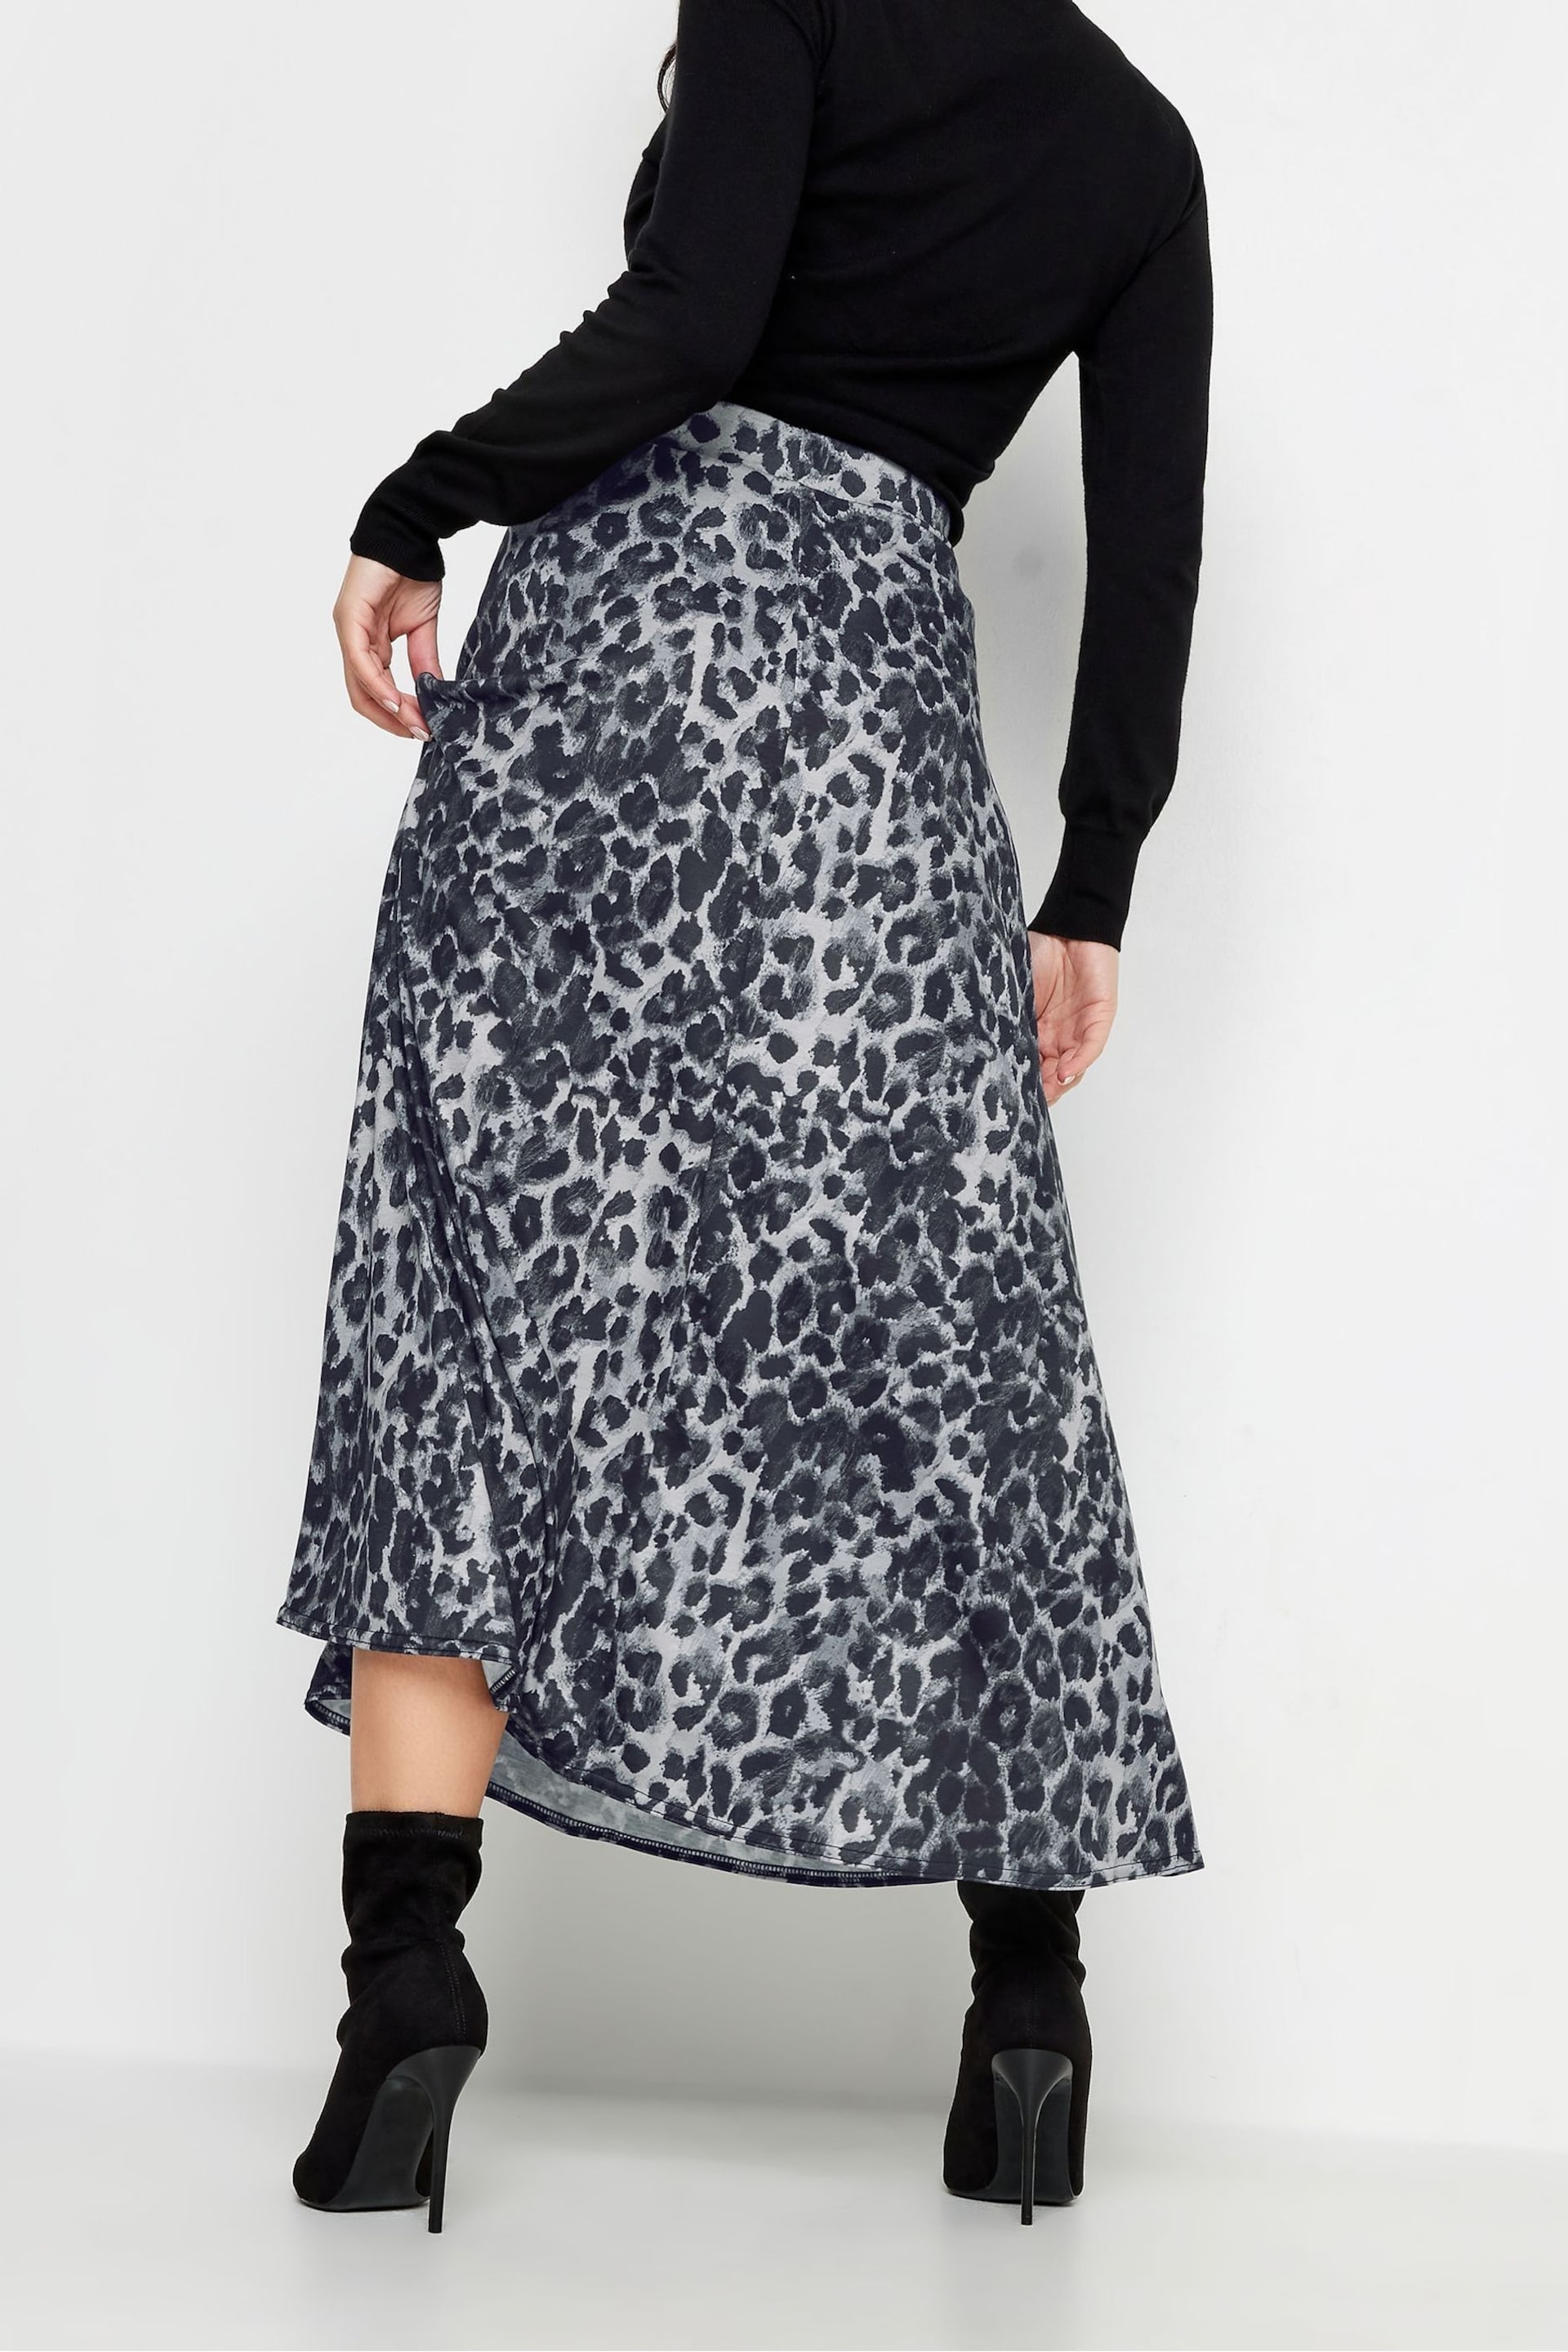 PixieGirl Petite Grey Leopard Print Maxi Skirt - Image 2 of 4